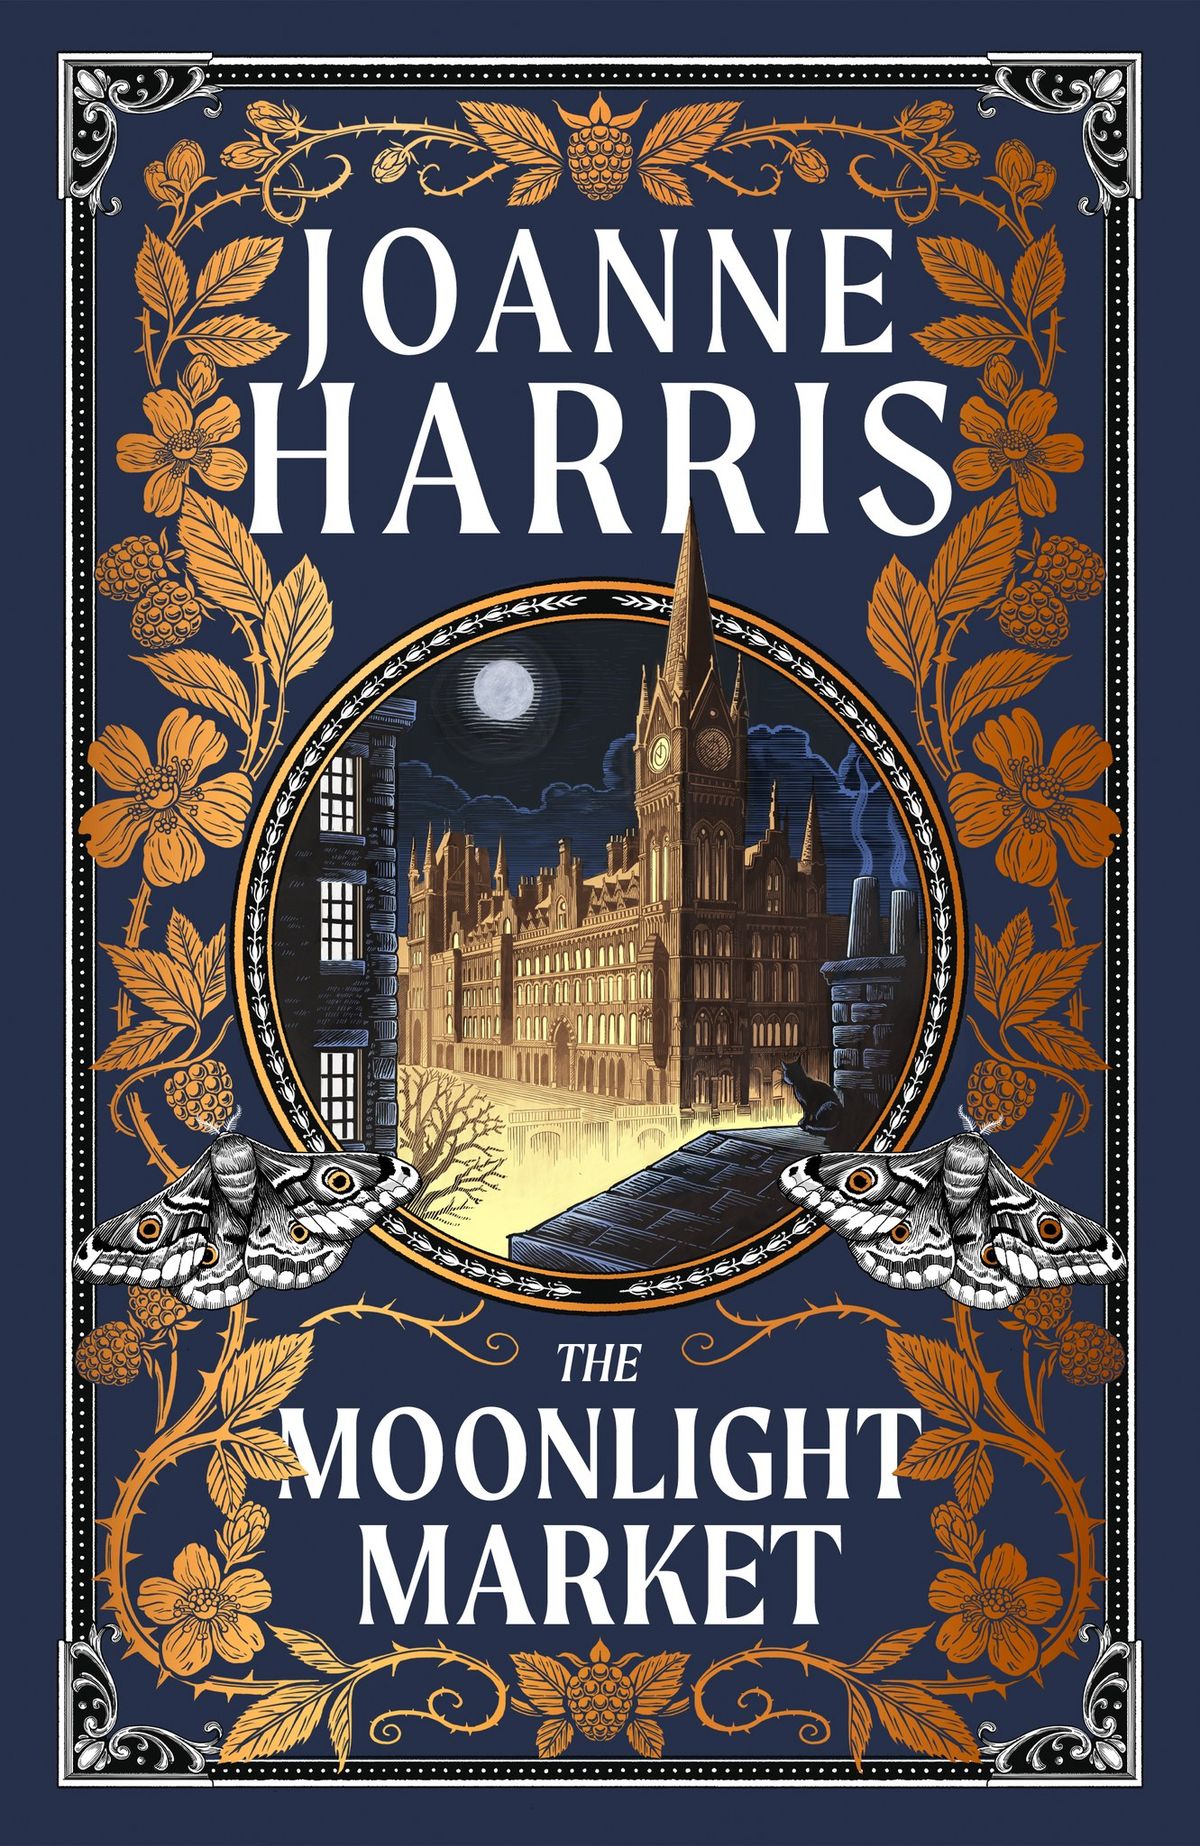 Author Talk & Signing - Joanne Harris; The Moonlight Market